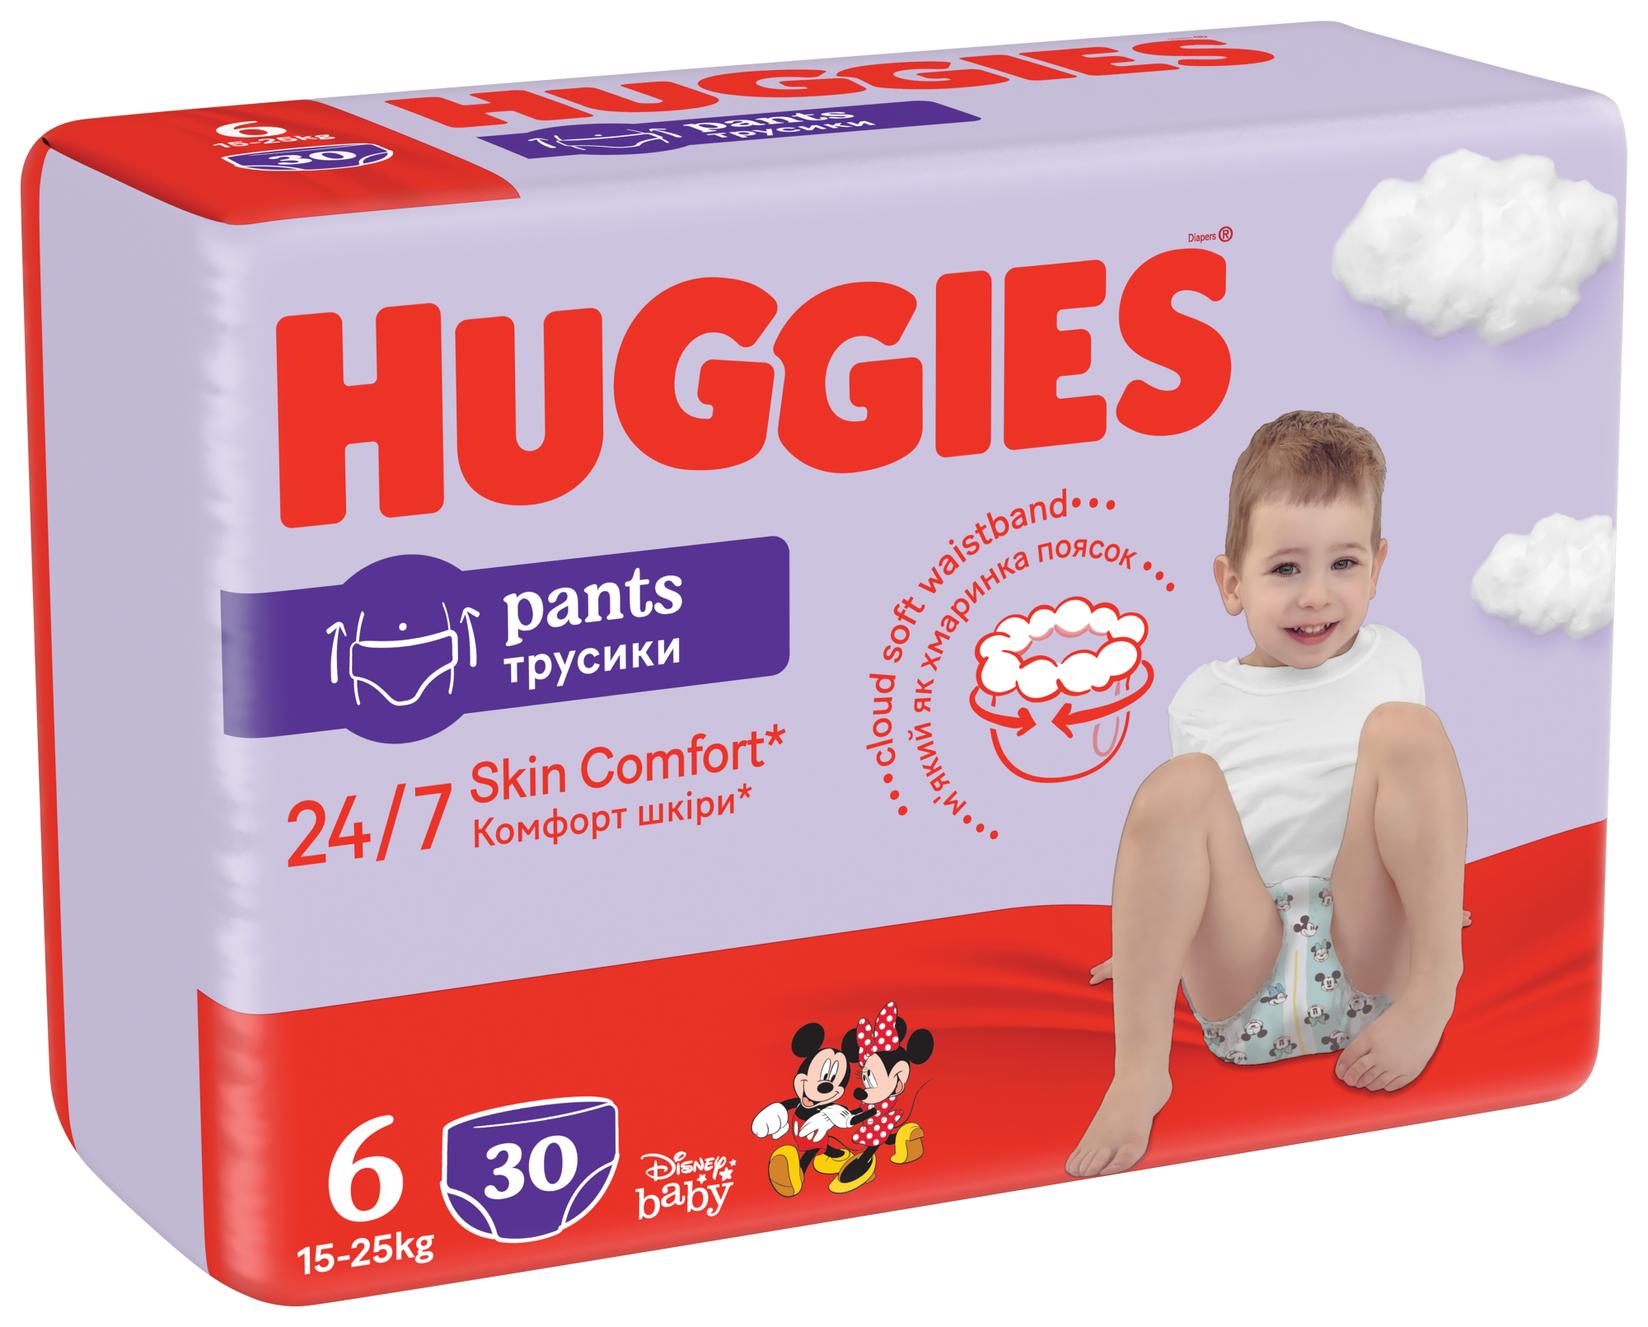 HUGGIES Pants Jumbo 6 Pelene , 15-25 kg, 30/1